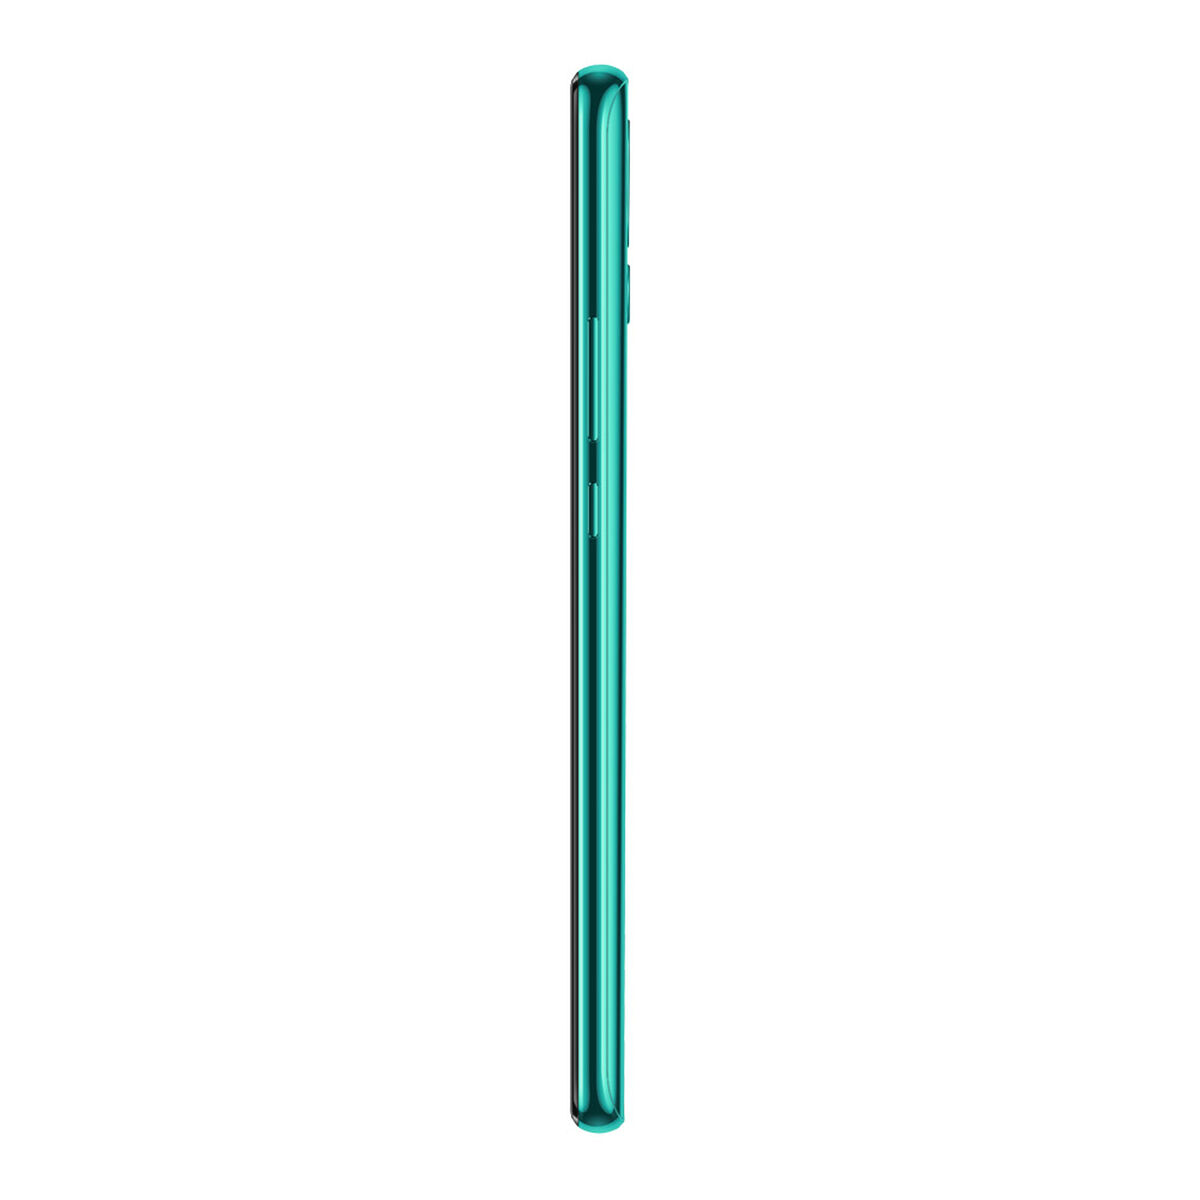 Celular Huawei Y9 Prime 2019 128GB 6,6" Verde Liberado